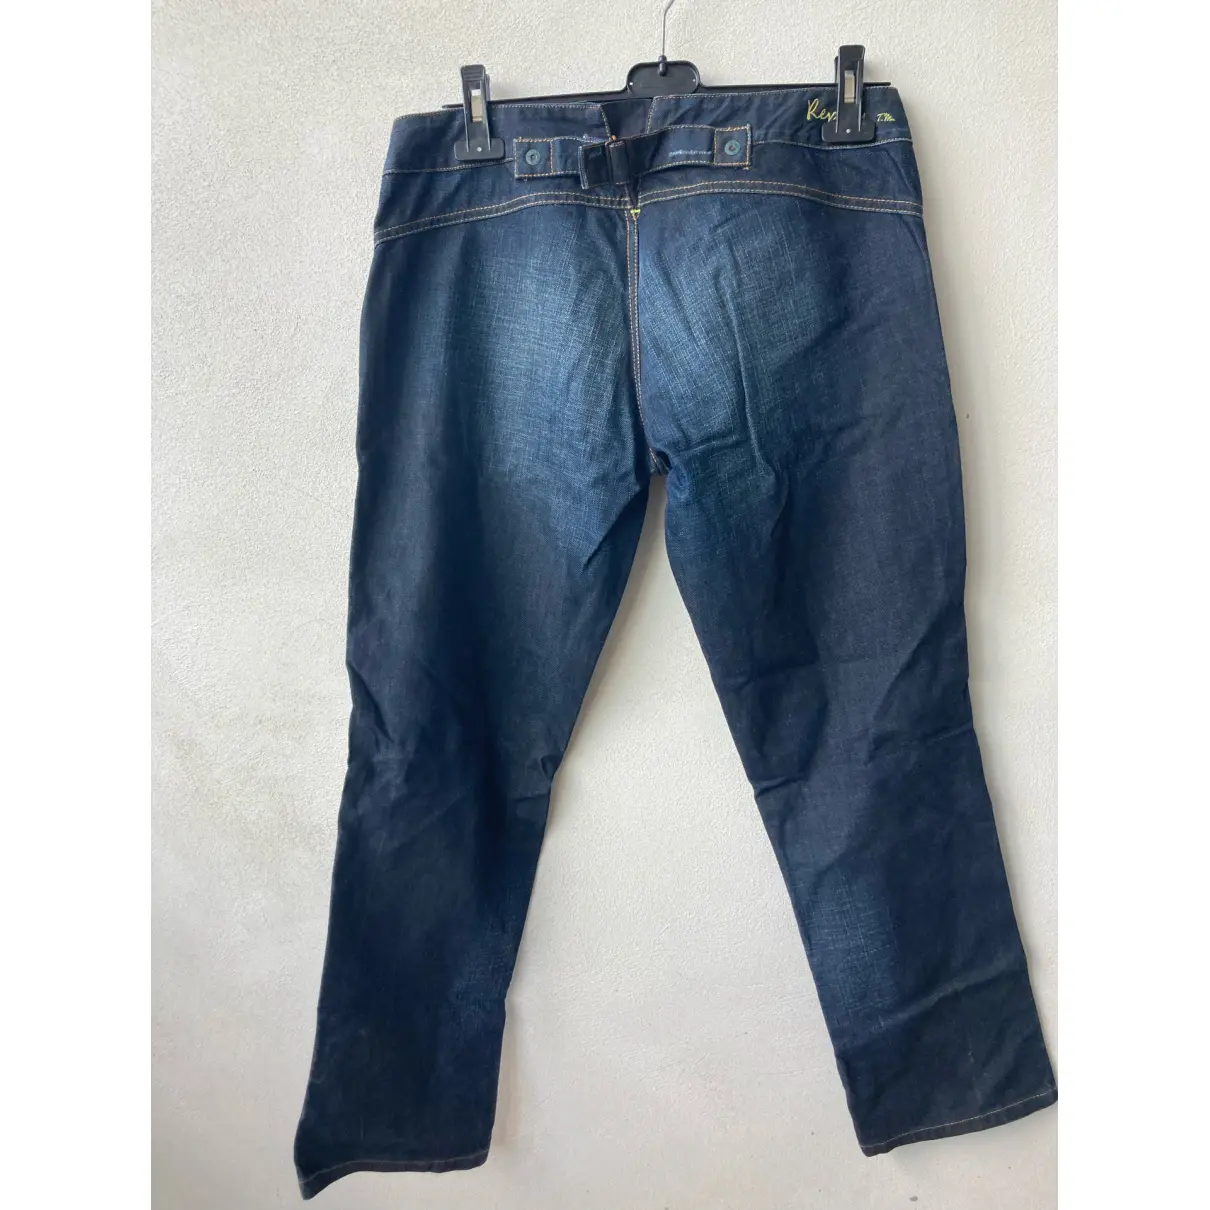 Buy Replay Short jeans online